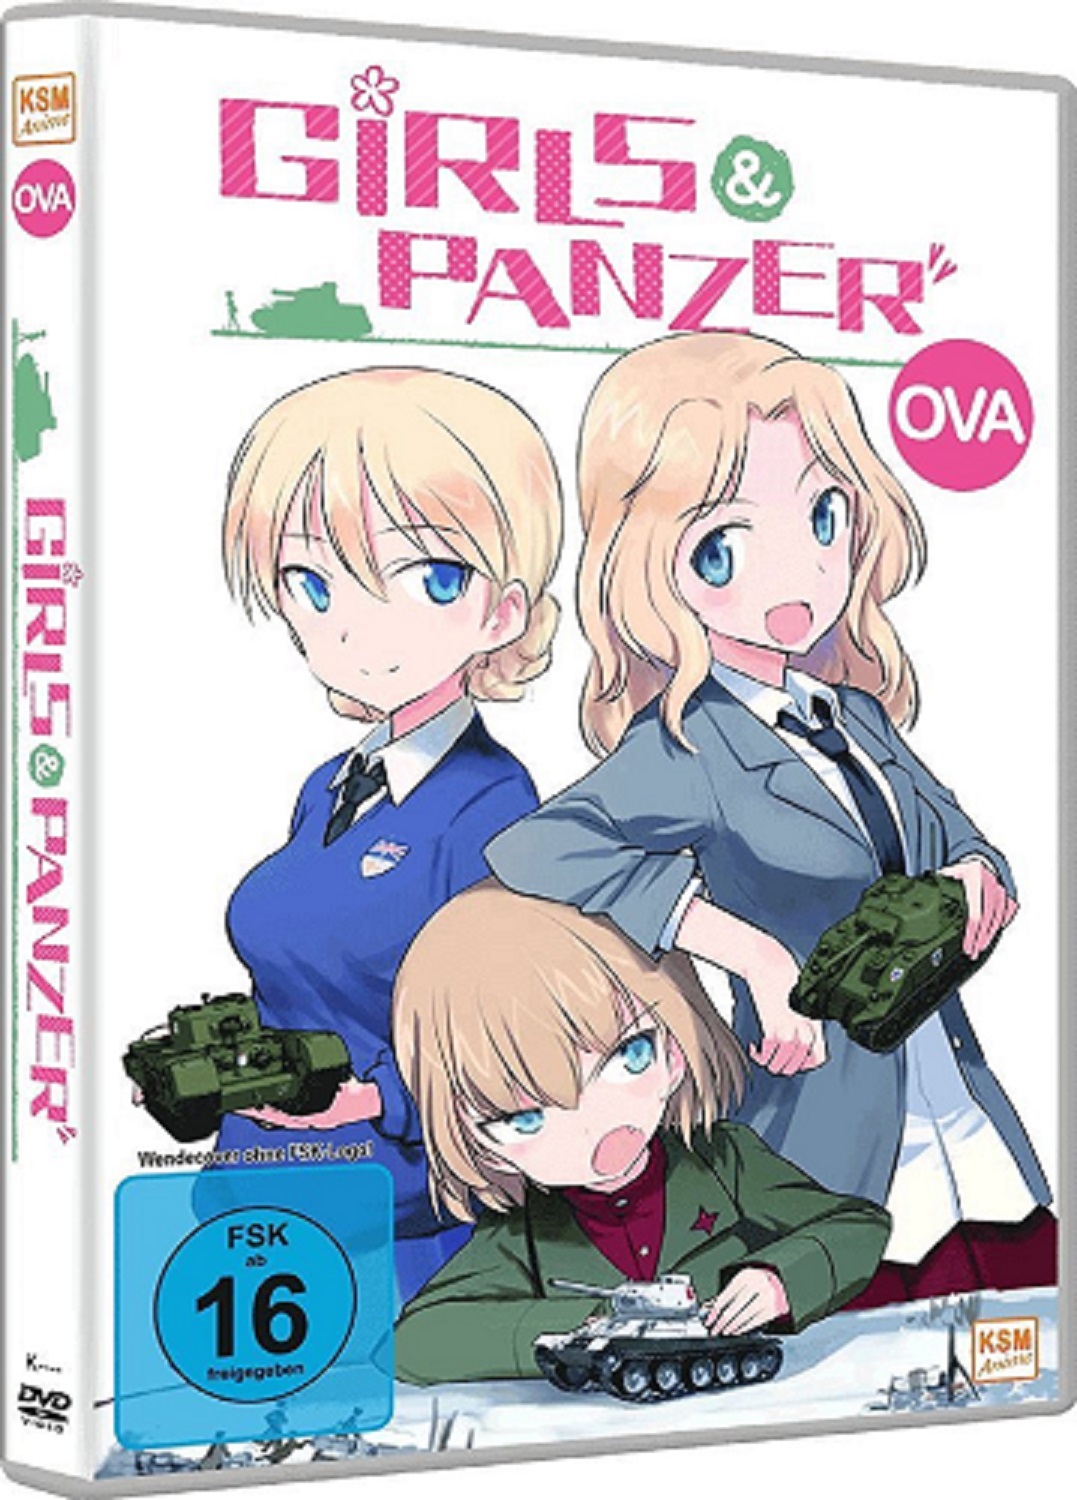 Girls & Panzer - OVA Collection [DVD] Image 2